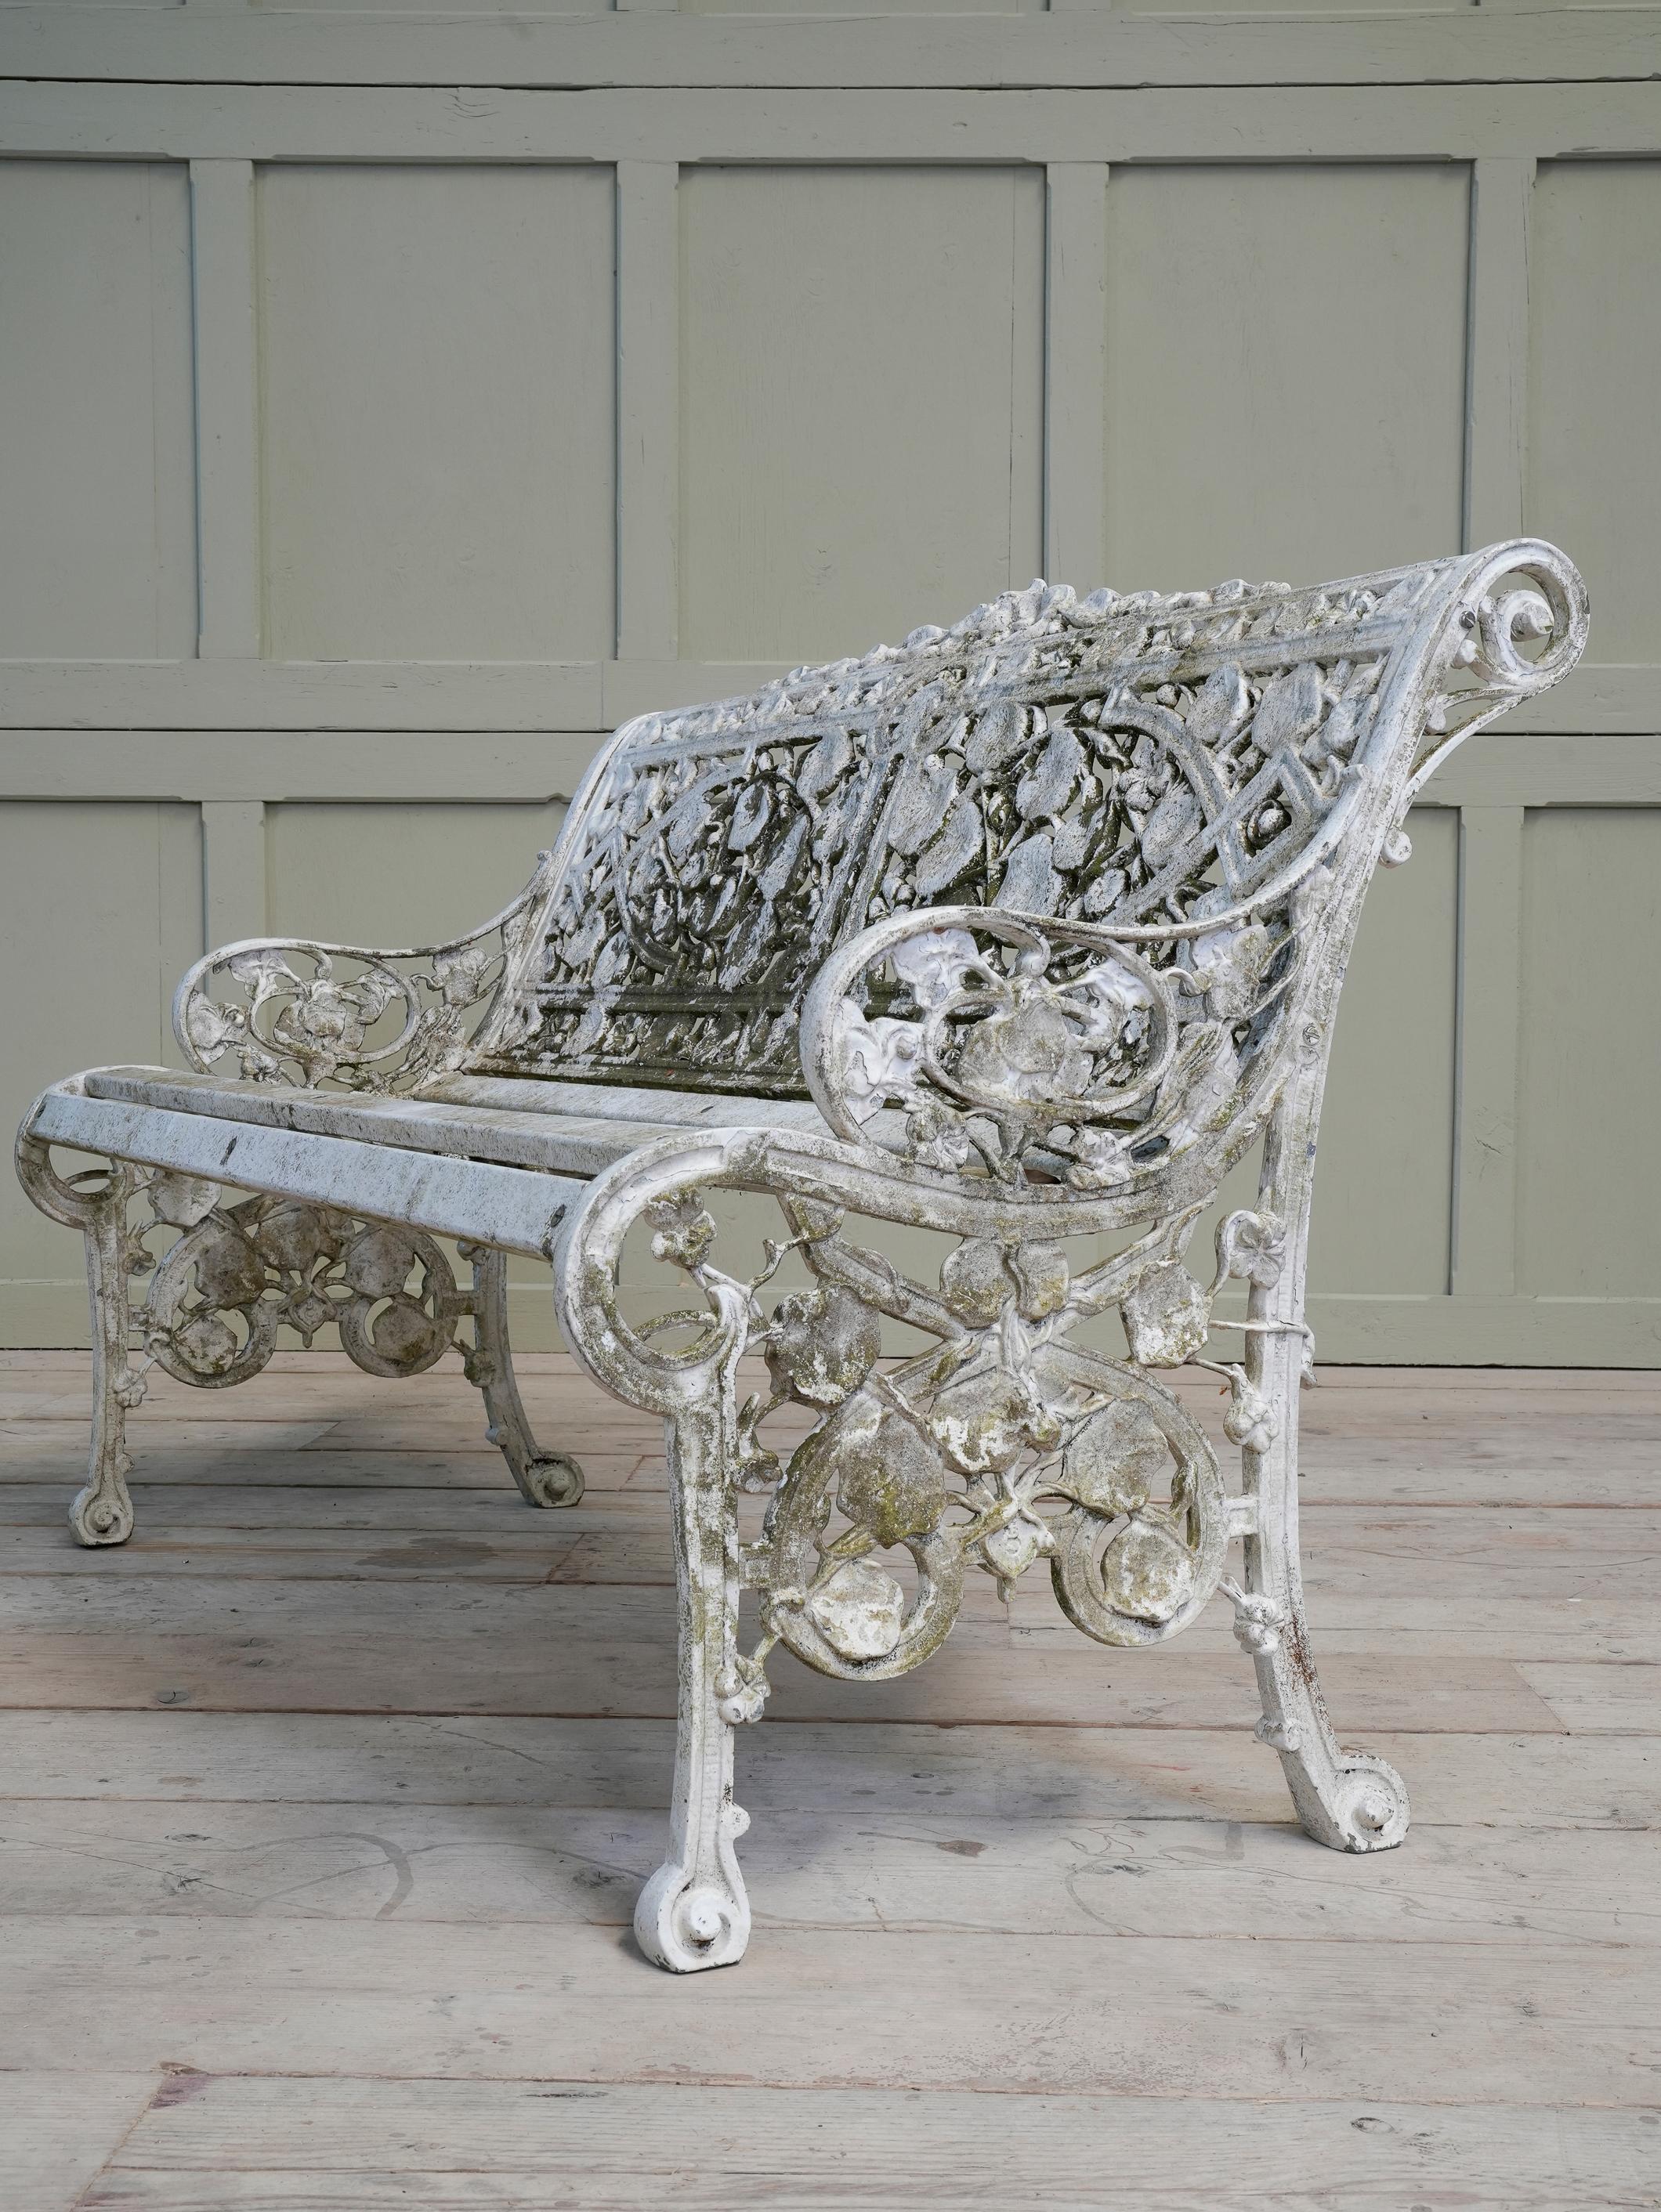 A cast alloy garden seat after the original 19th century Coalbrookdale 